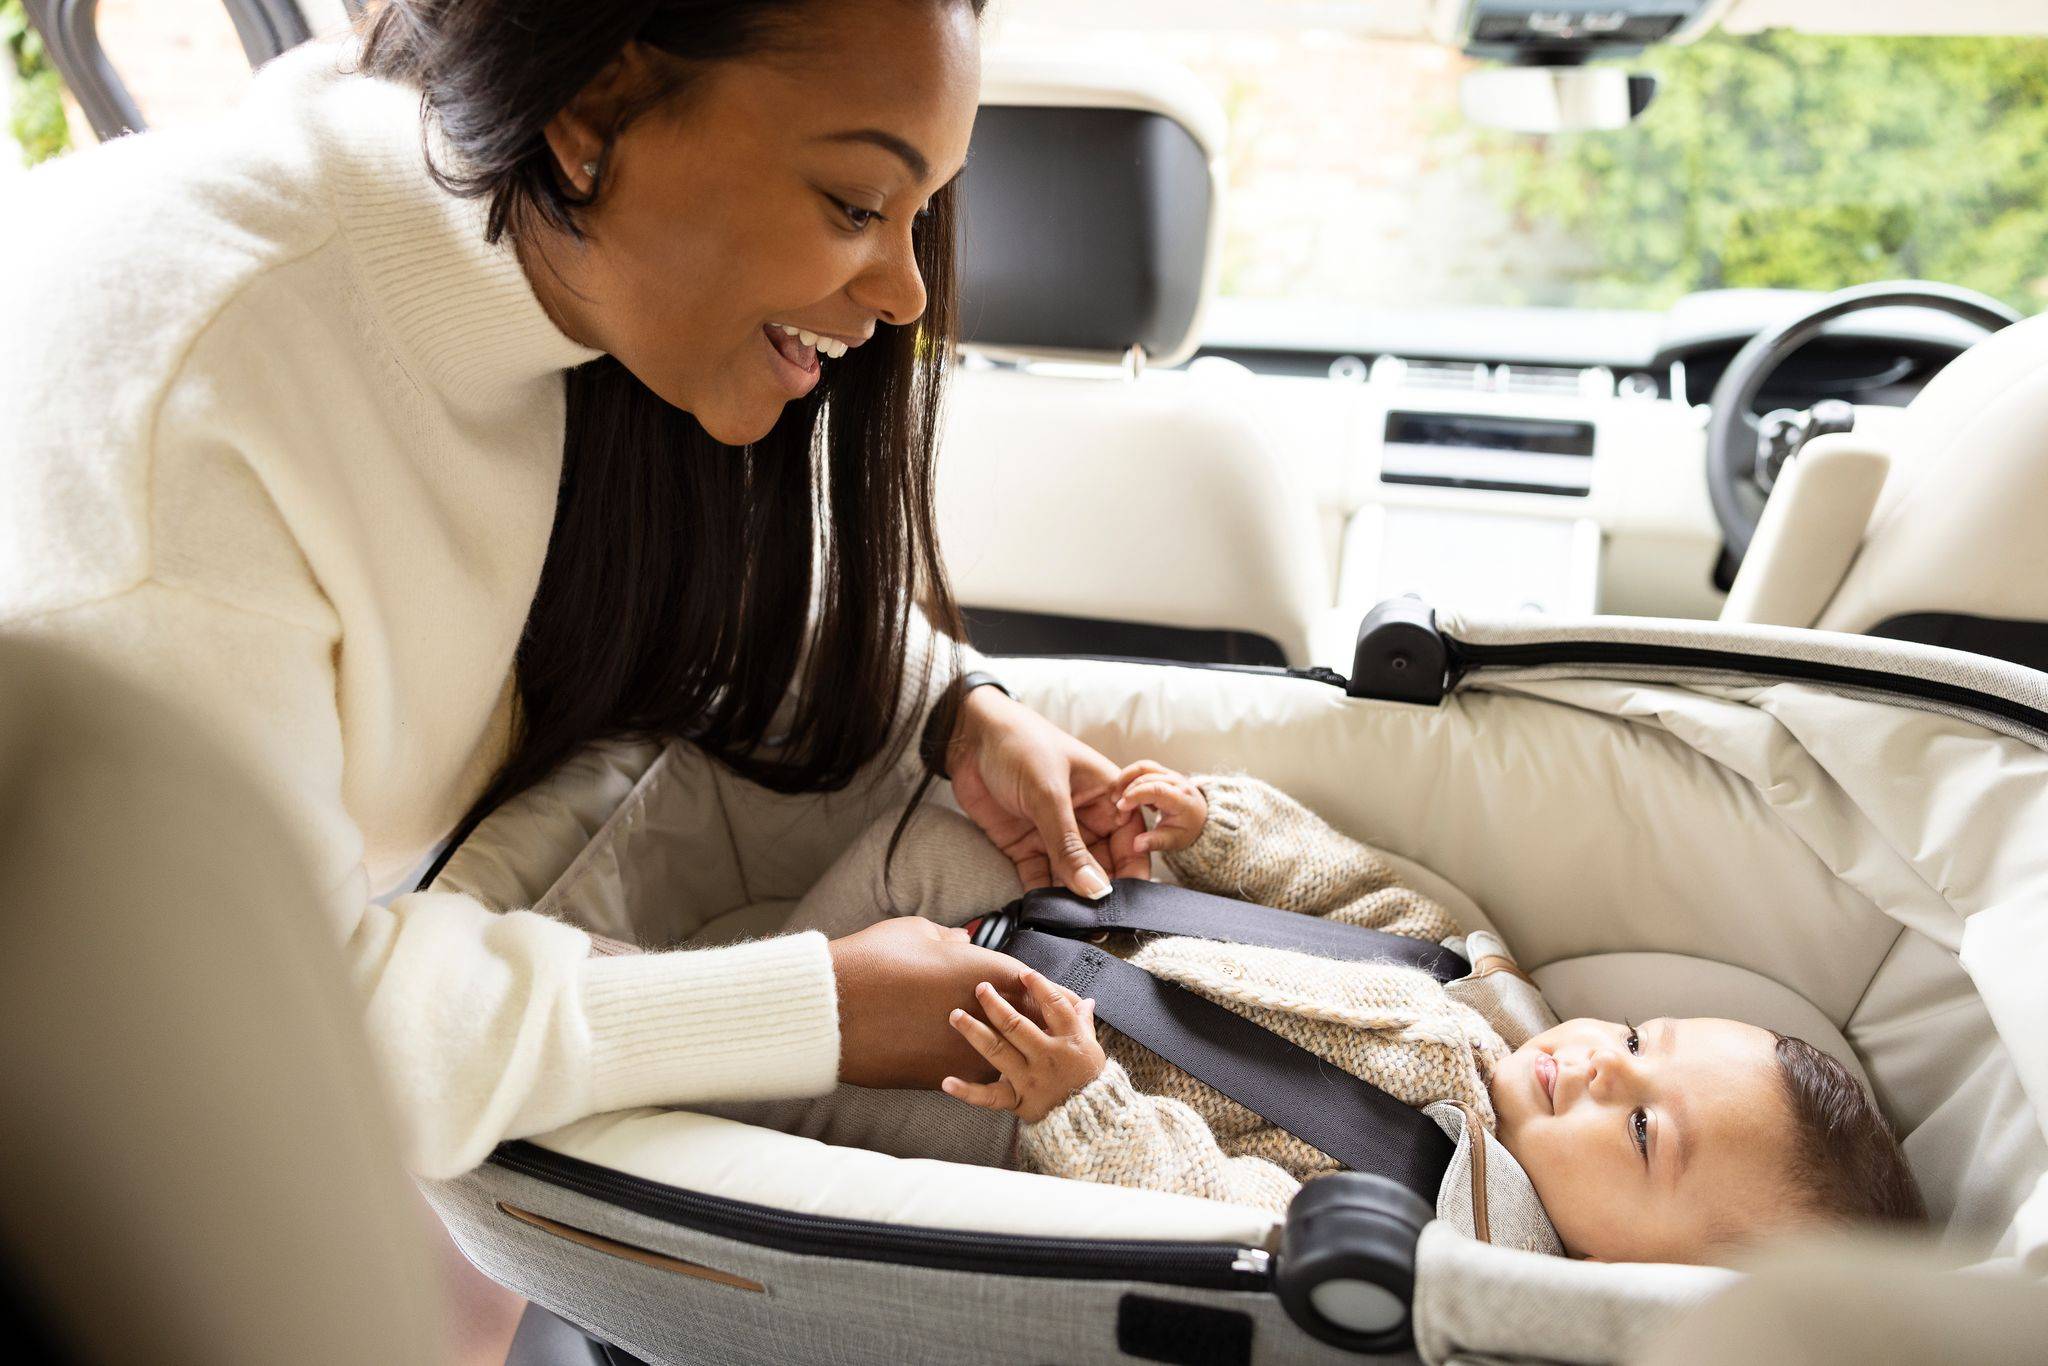 Maxi Cosi Pebble Pro Car Seat  Car Seats – Mamas & Papas IE